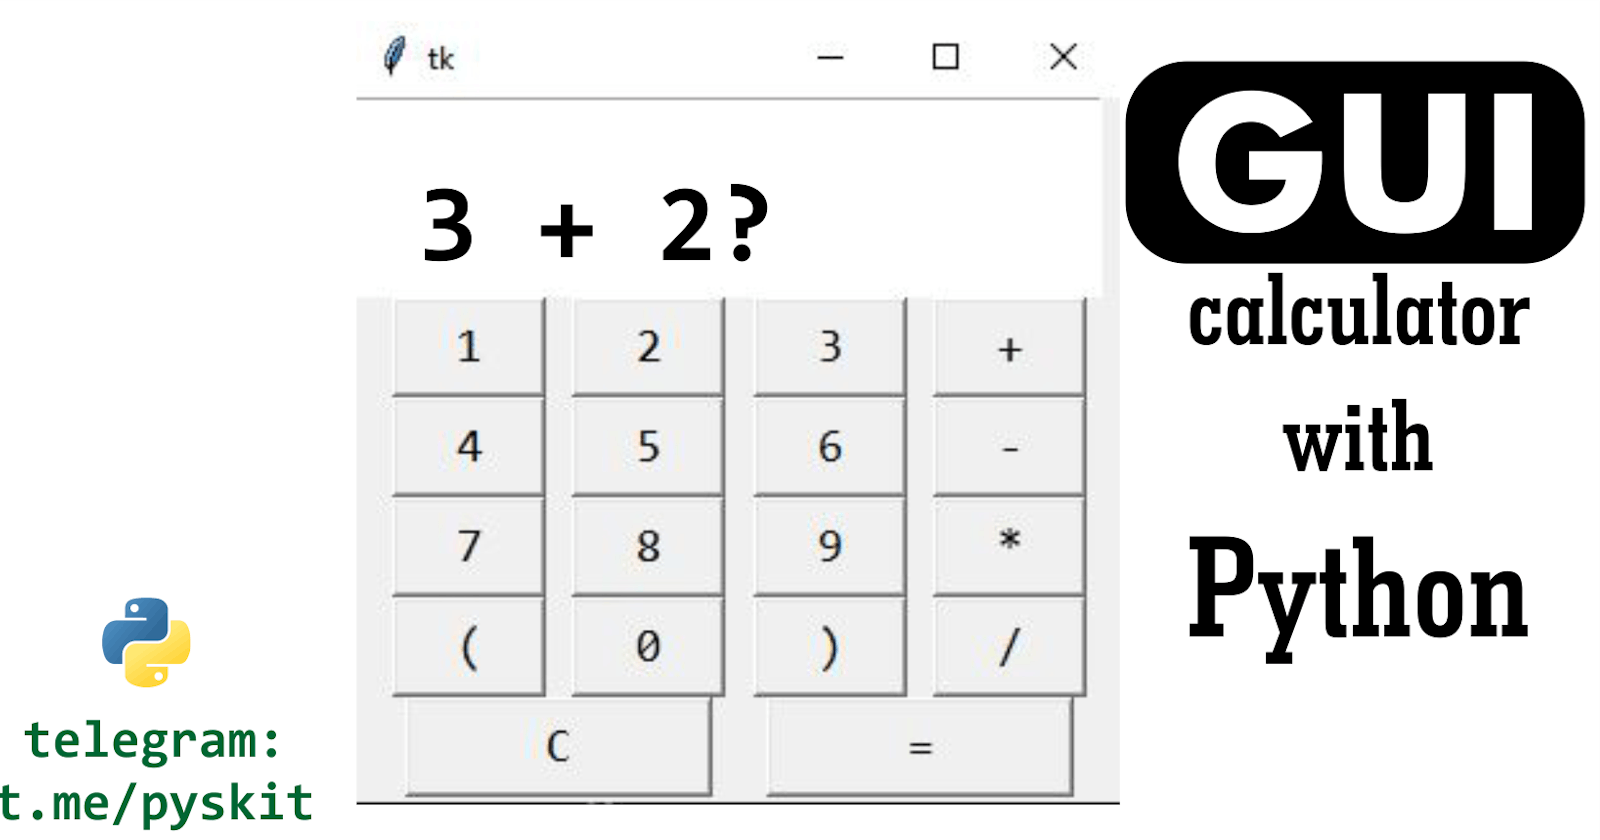 GUI Calculator with Python